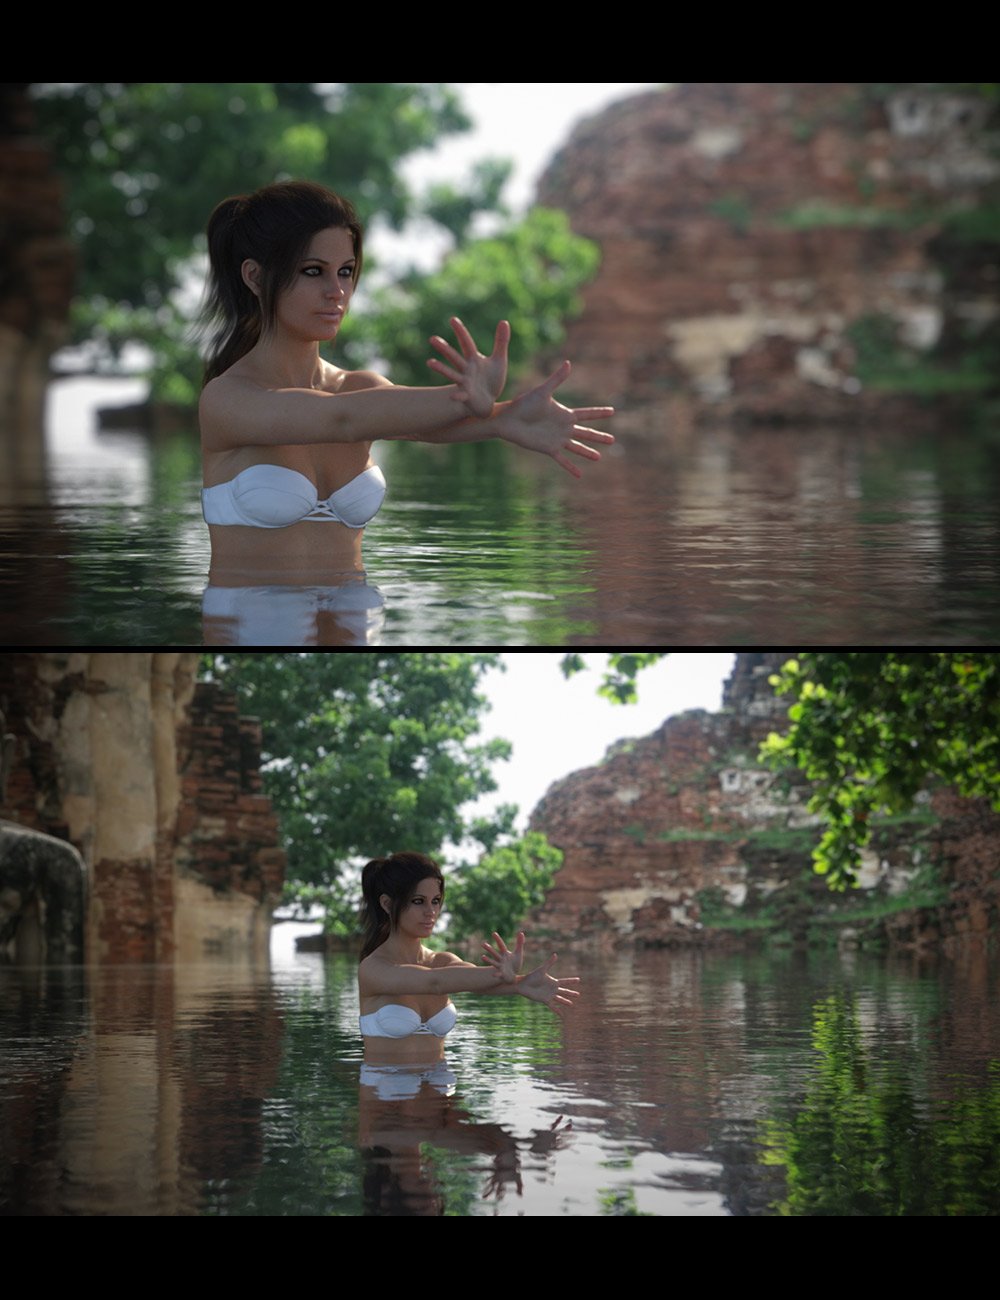 Take A Swim by: Dreamlight, 3D Models by Daz 3D